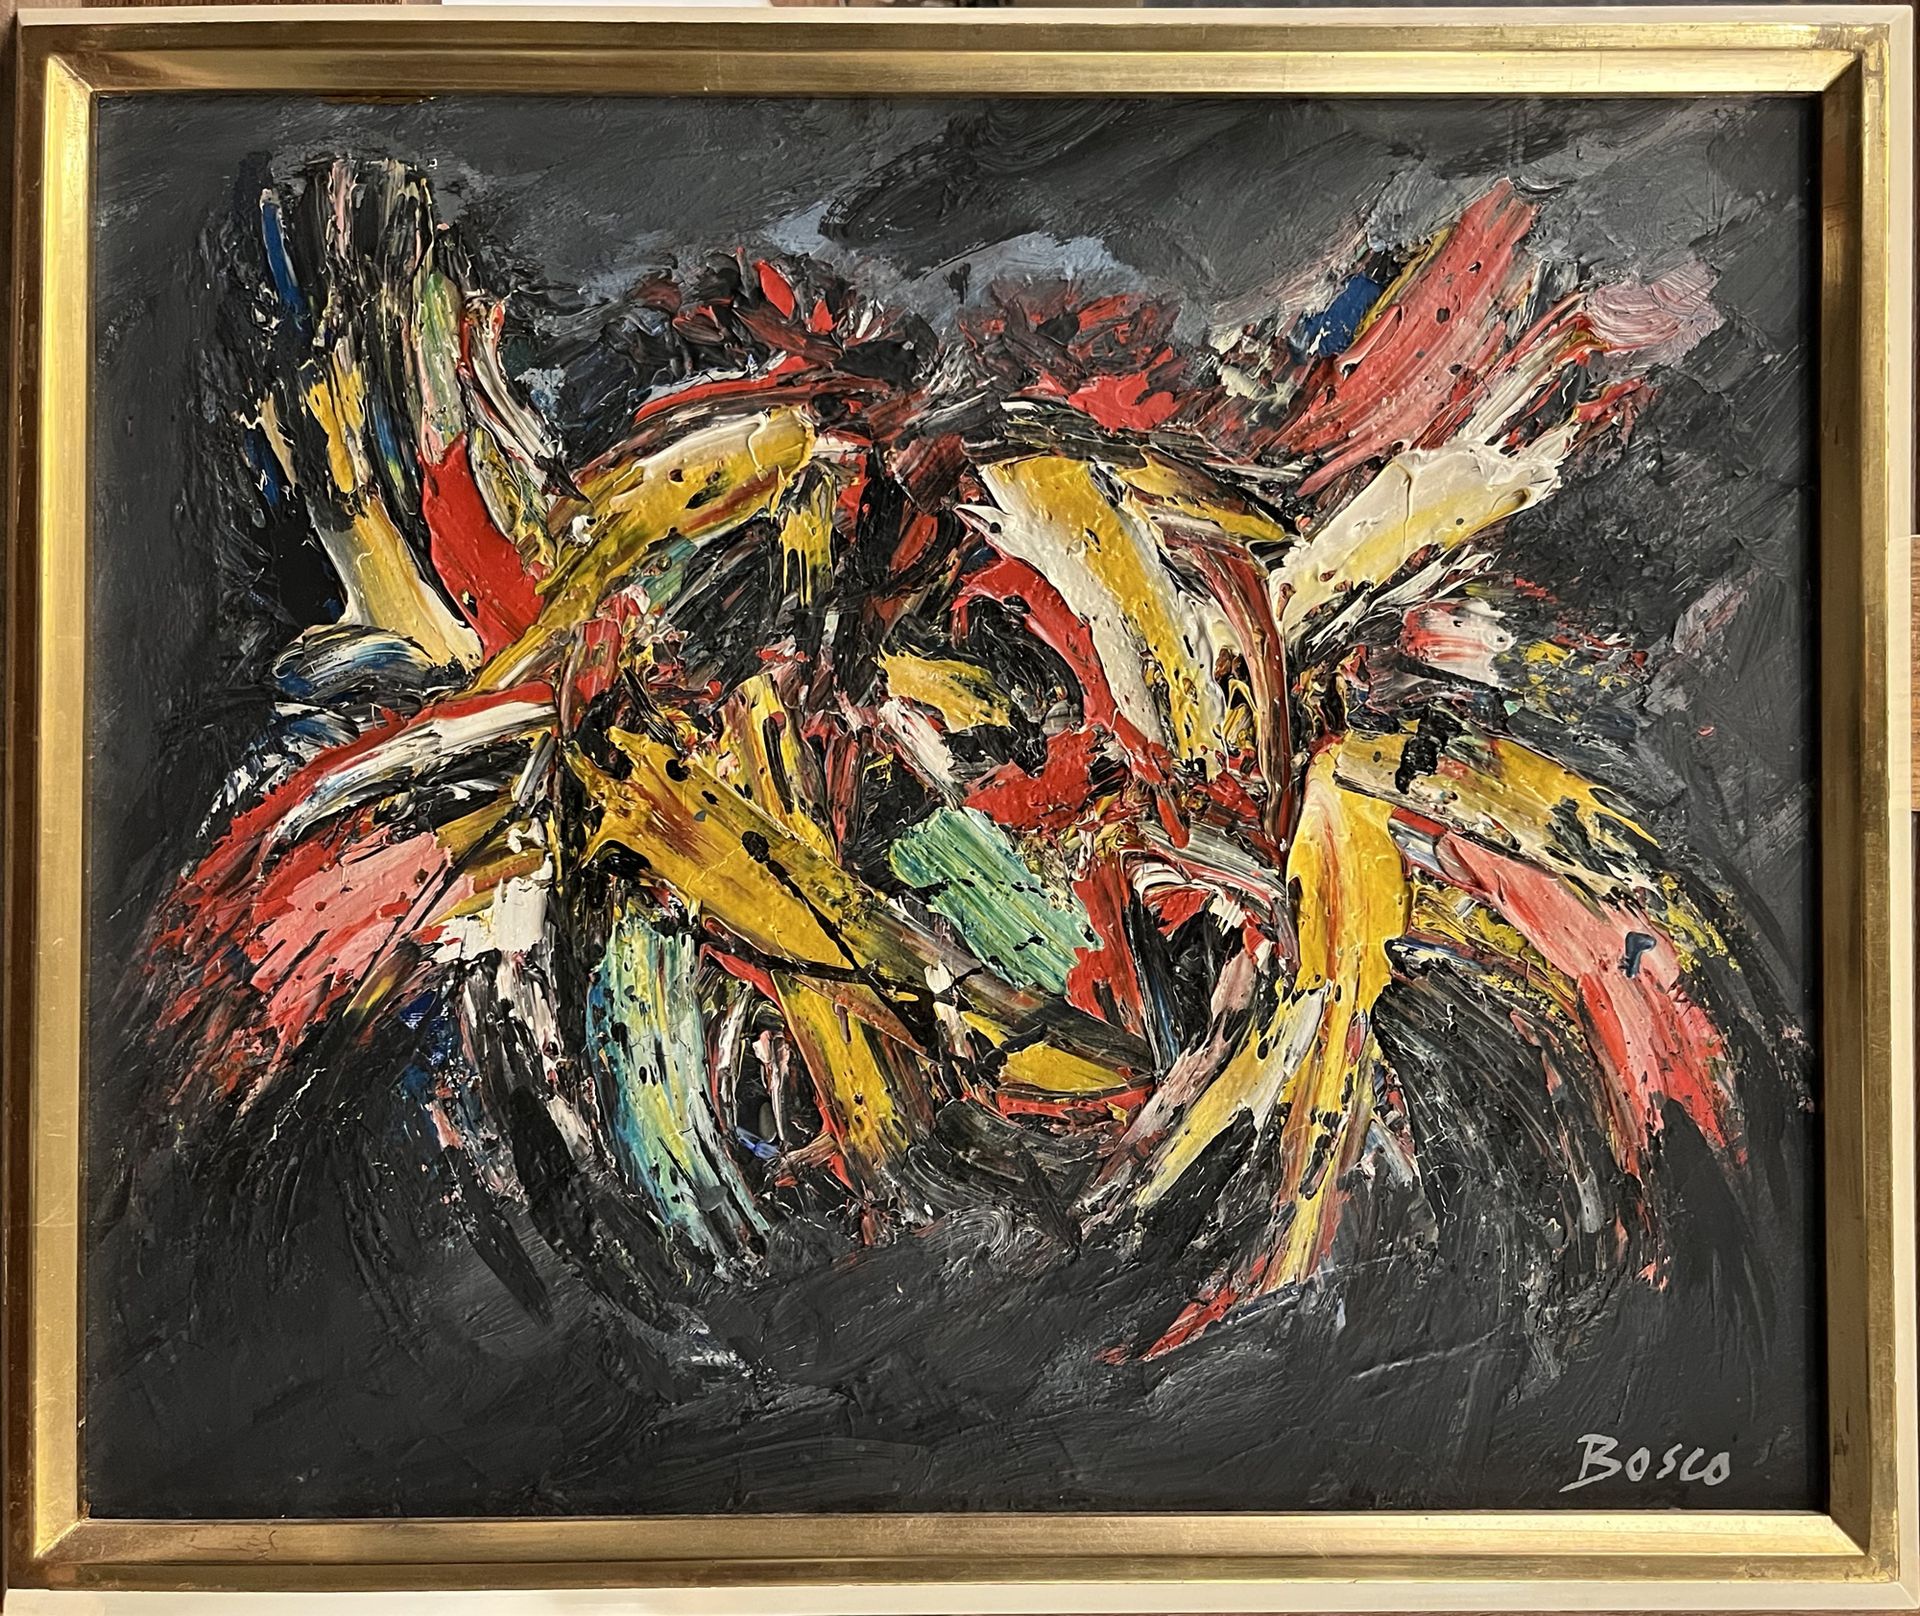 Null 皮埃尔-波斯克 (1909-1993)

"斗鸡"。

布面油画，左下方有签名。 

38 x 45厘米